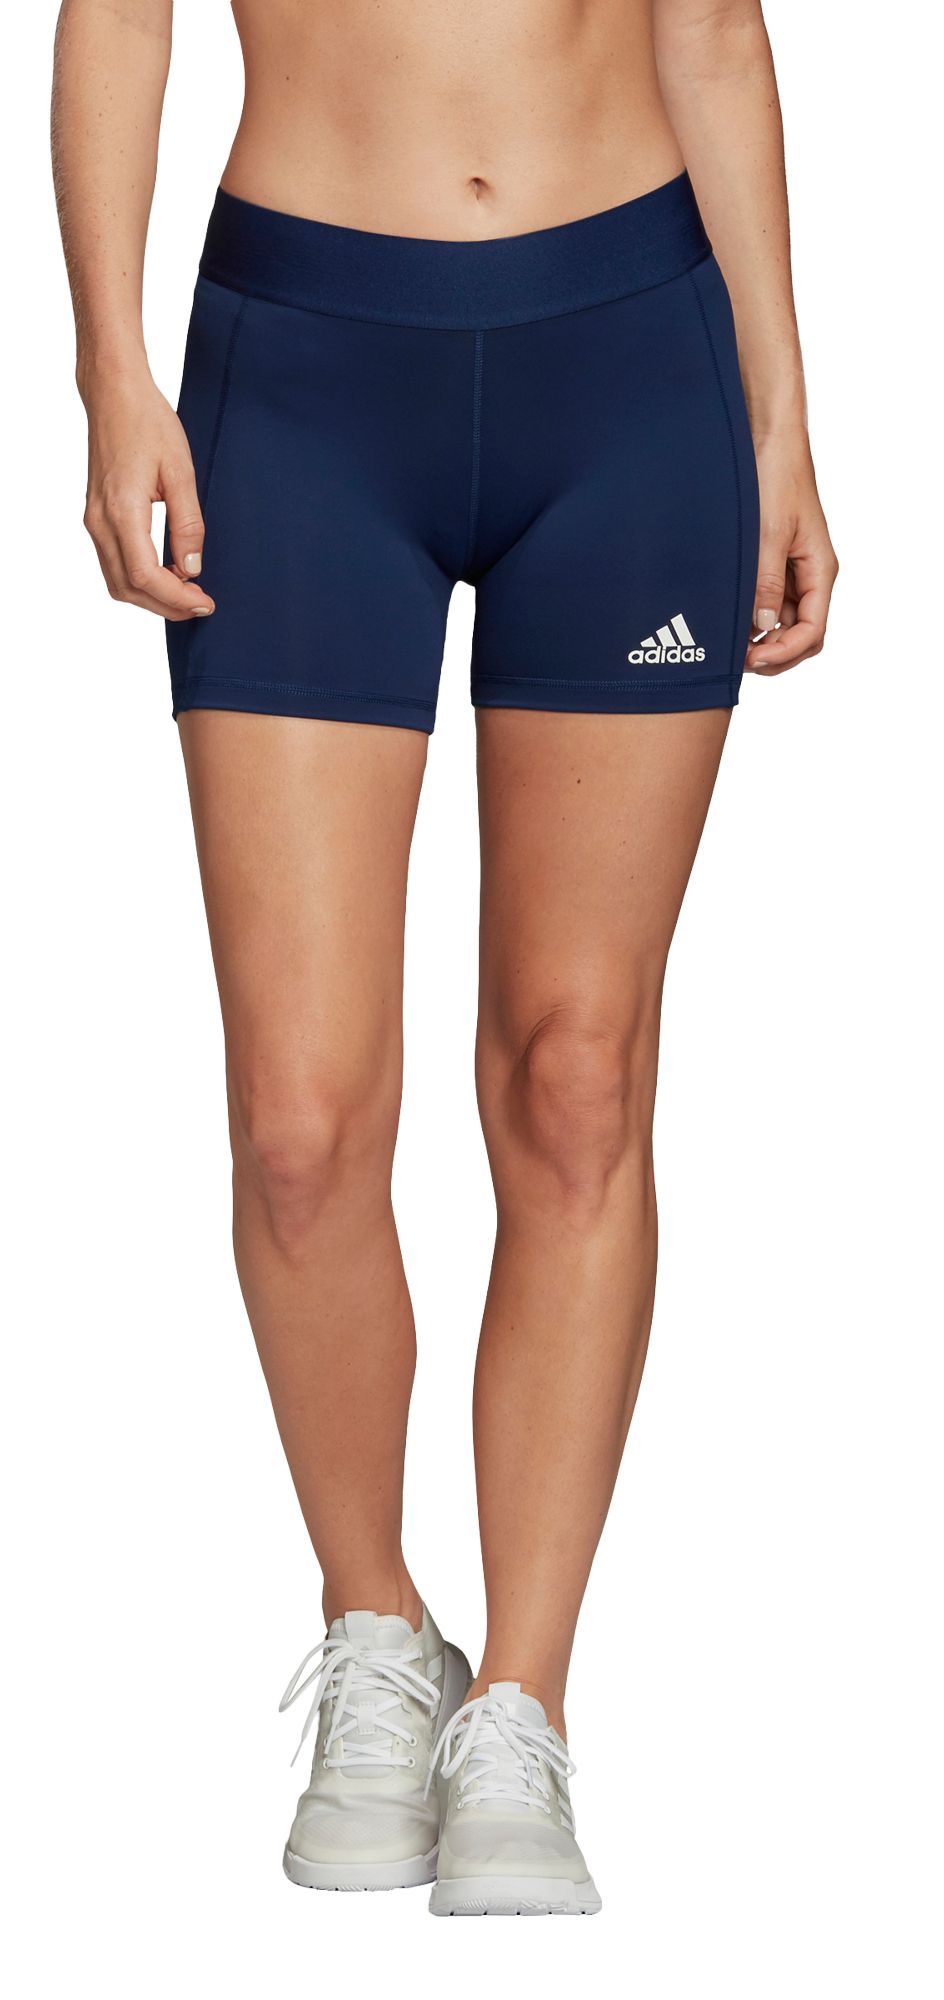 adidas alphaskin volleyball shorts